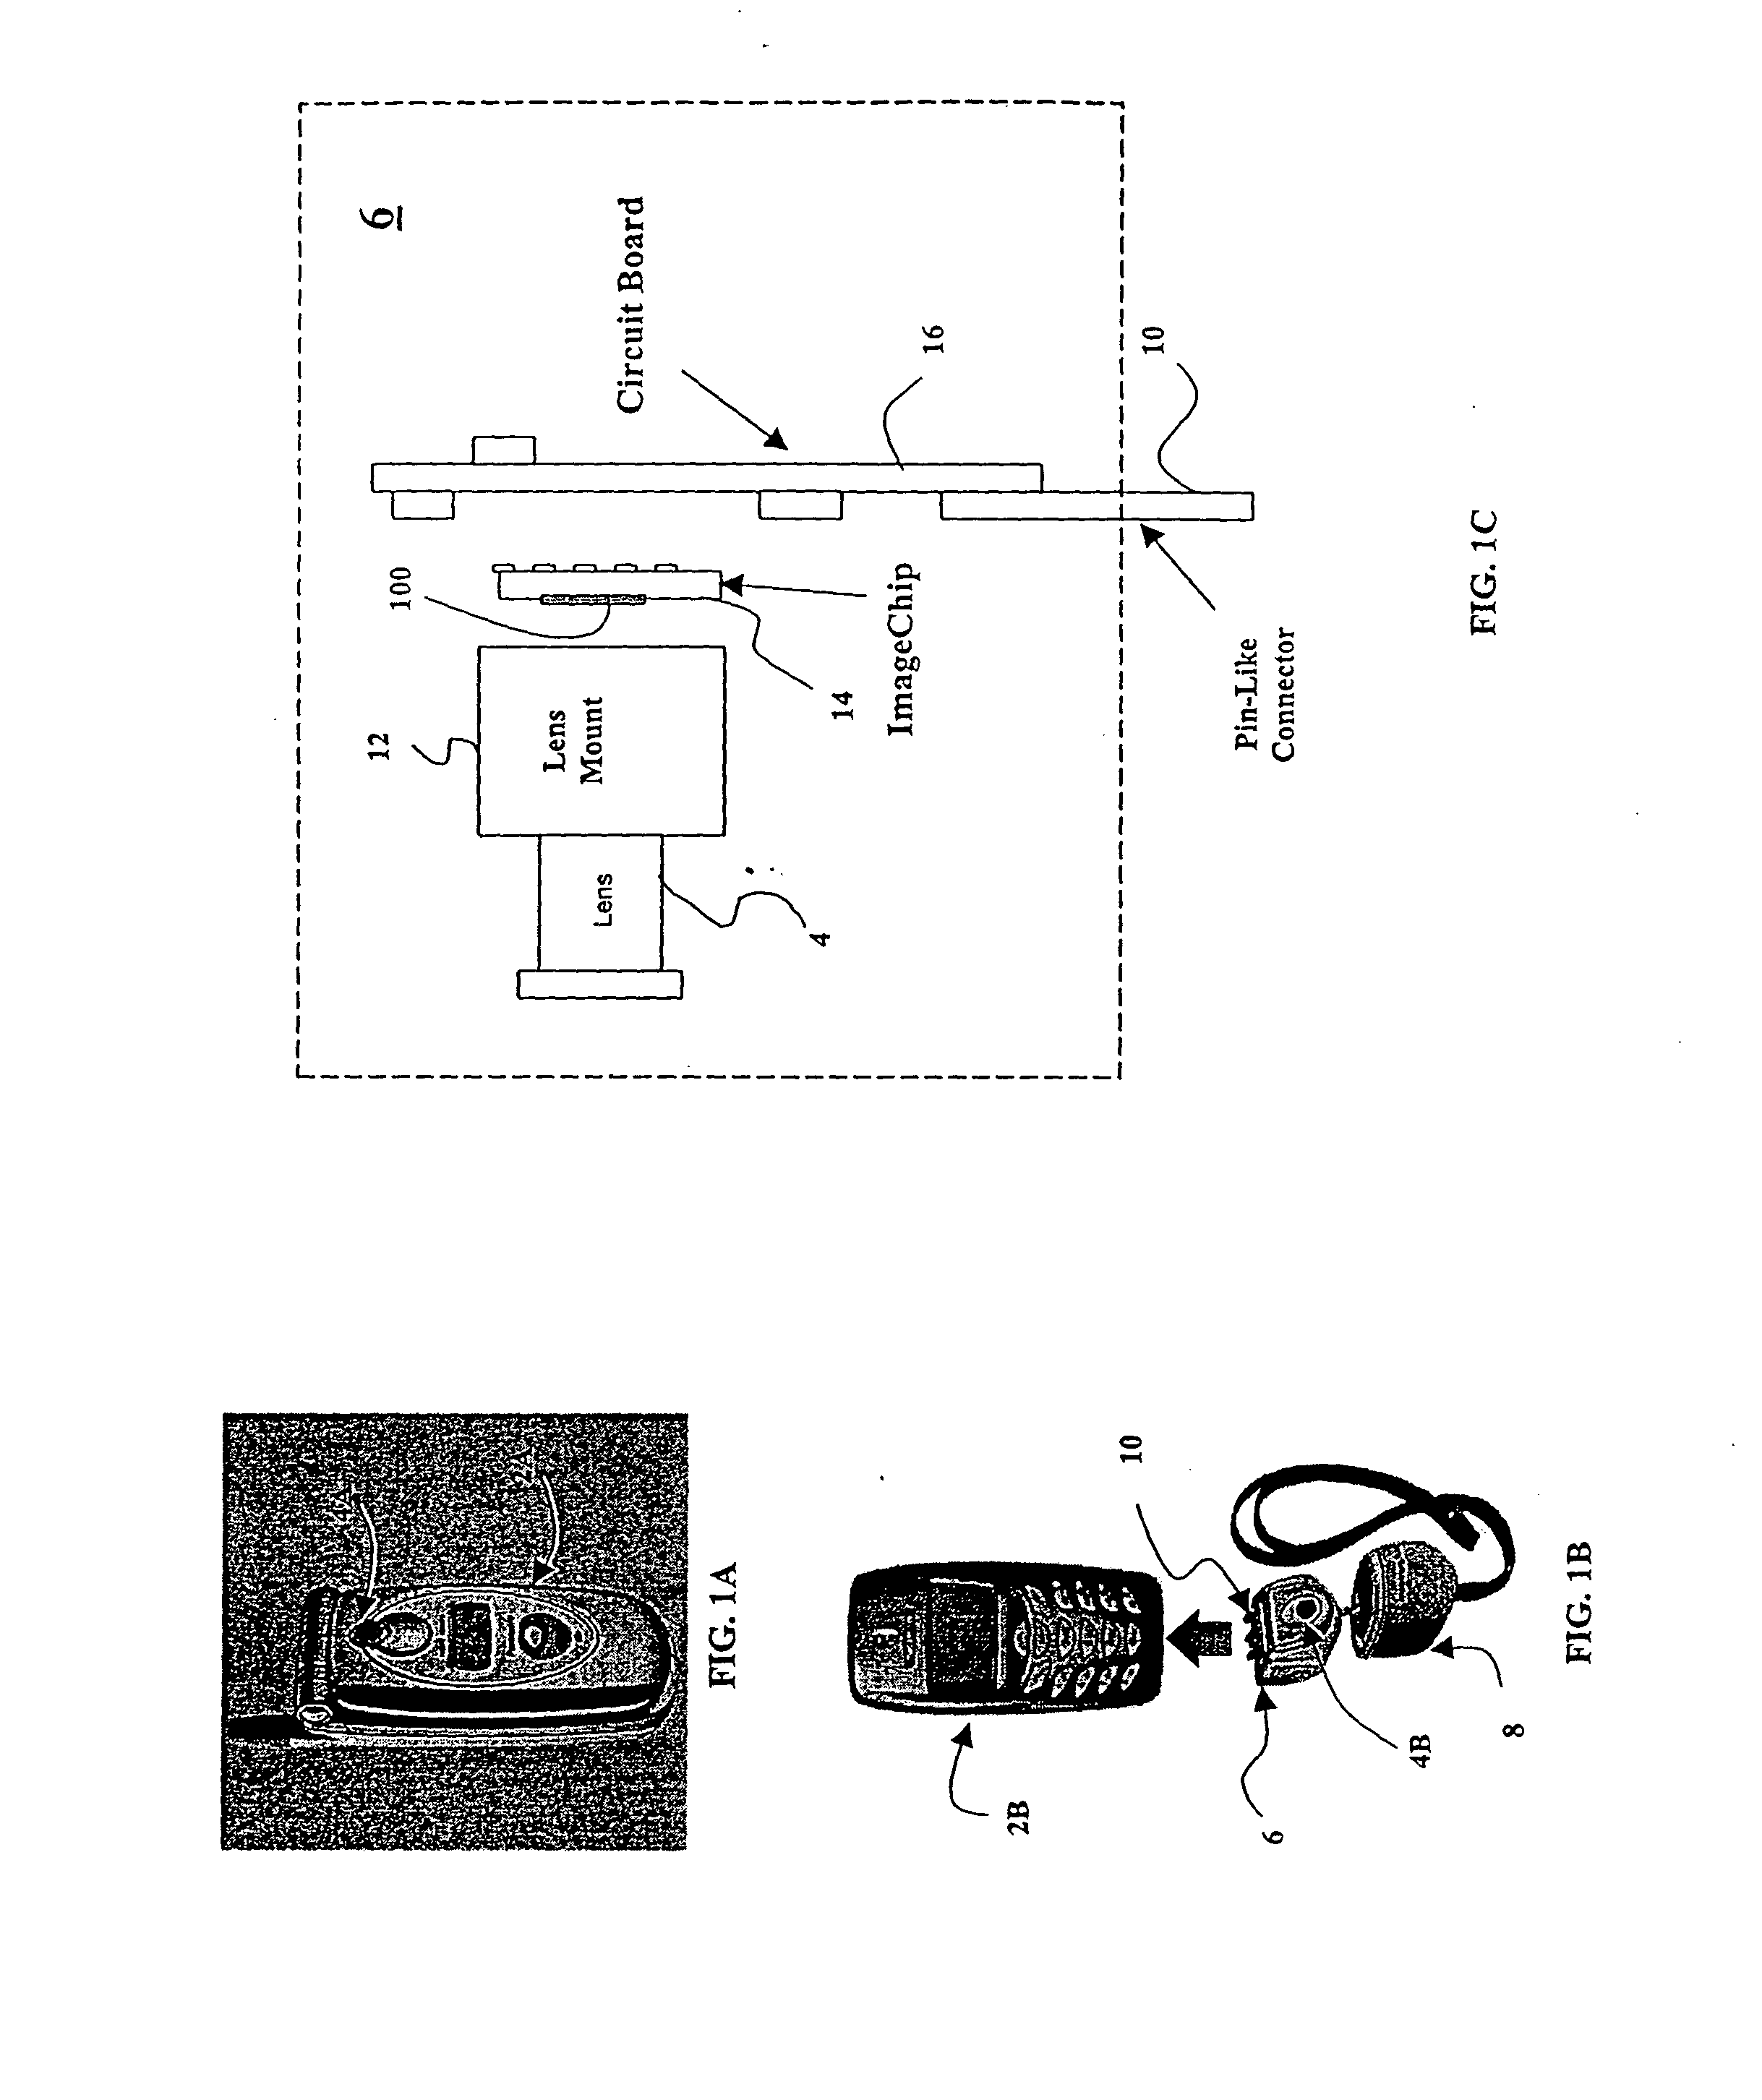 Photoconductor on active pixel image sensor